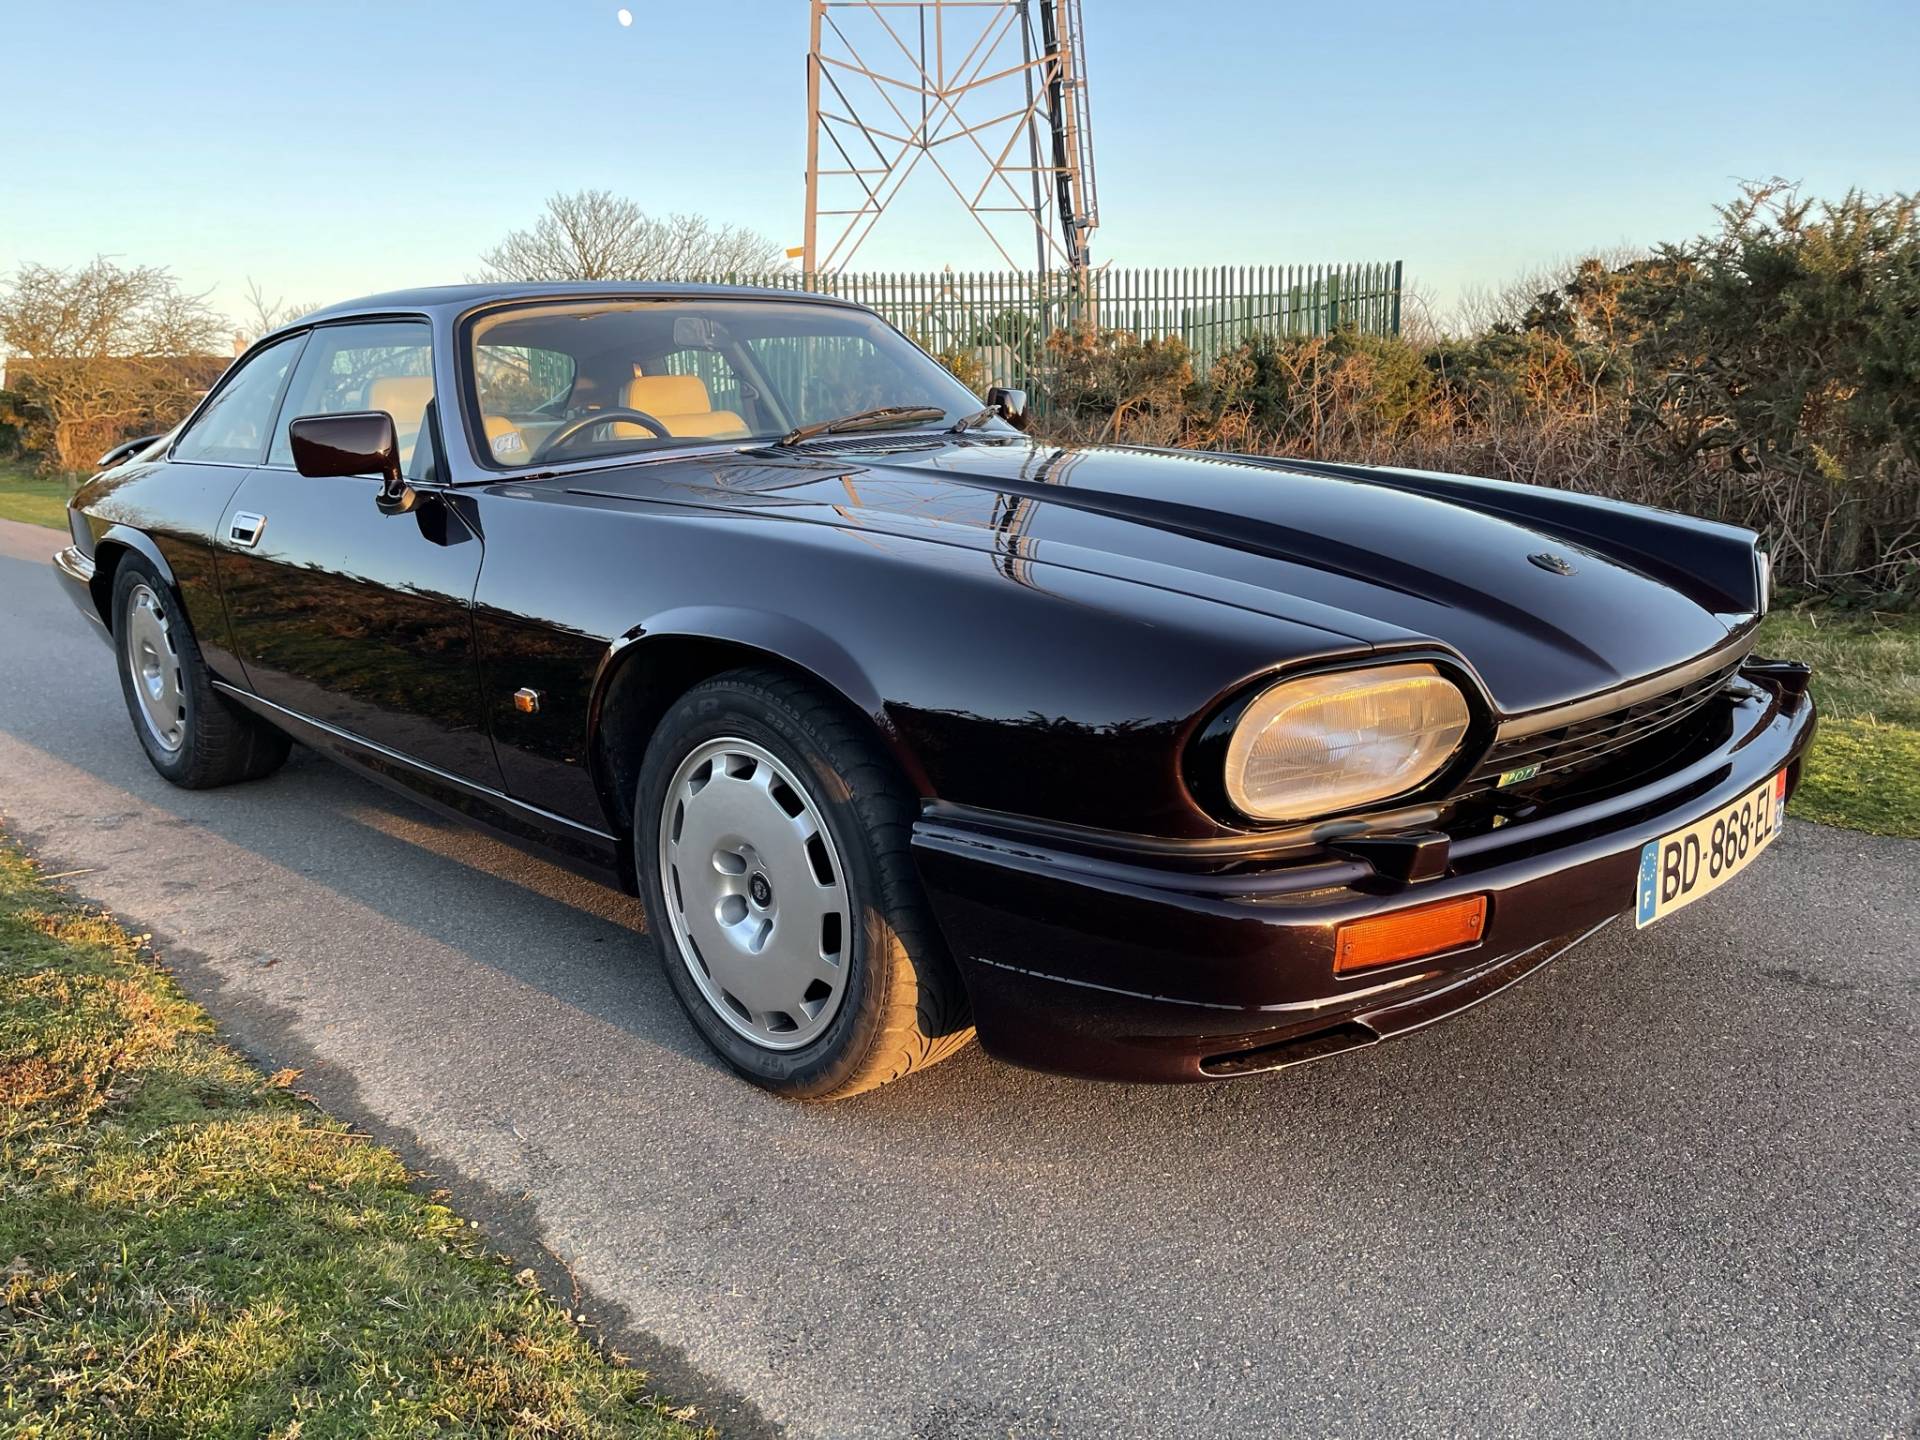 Jaguar XJRS 6.0